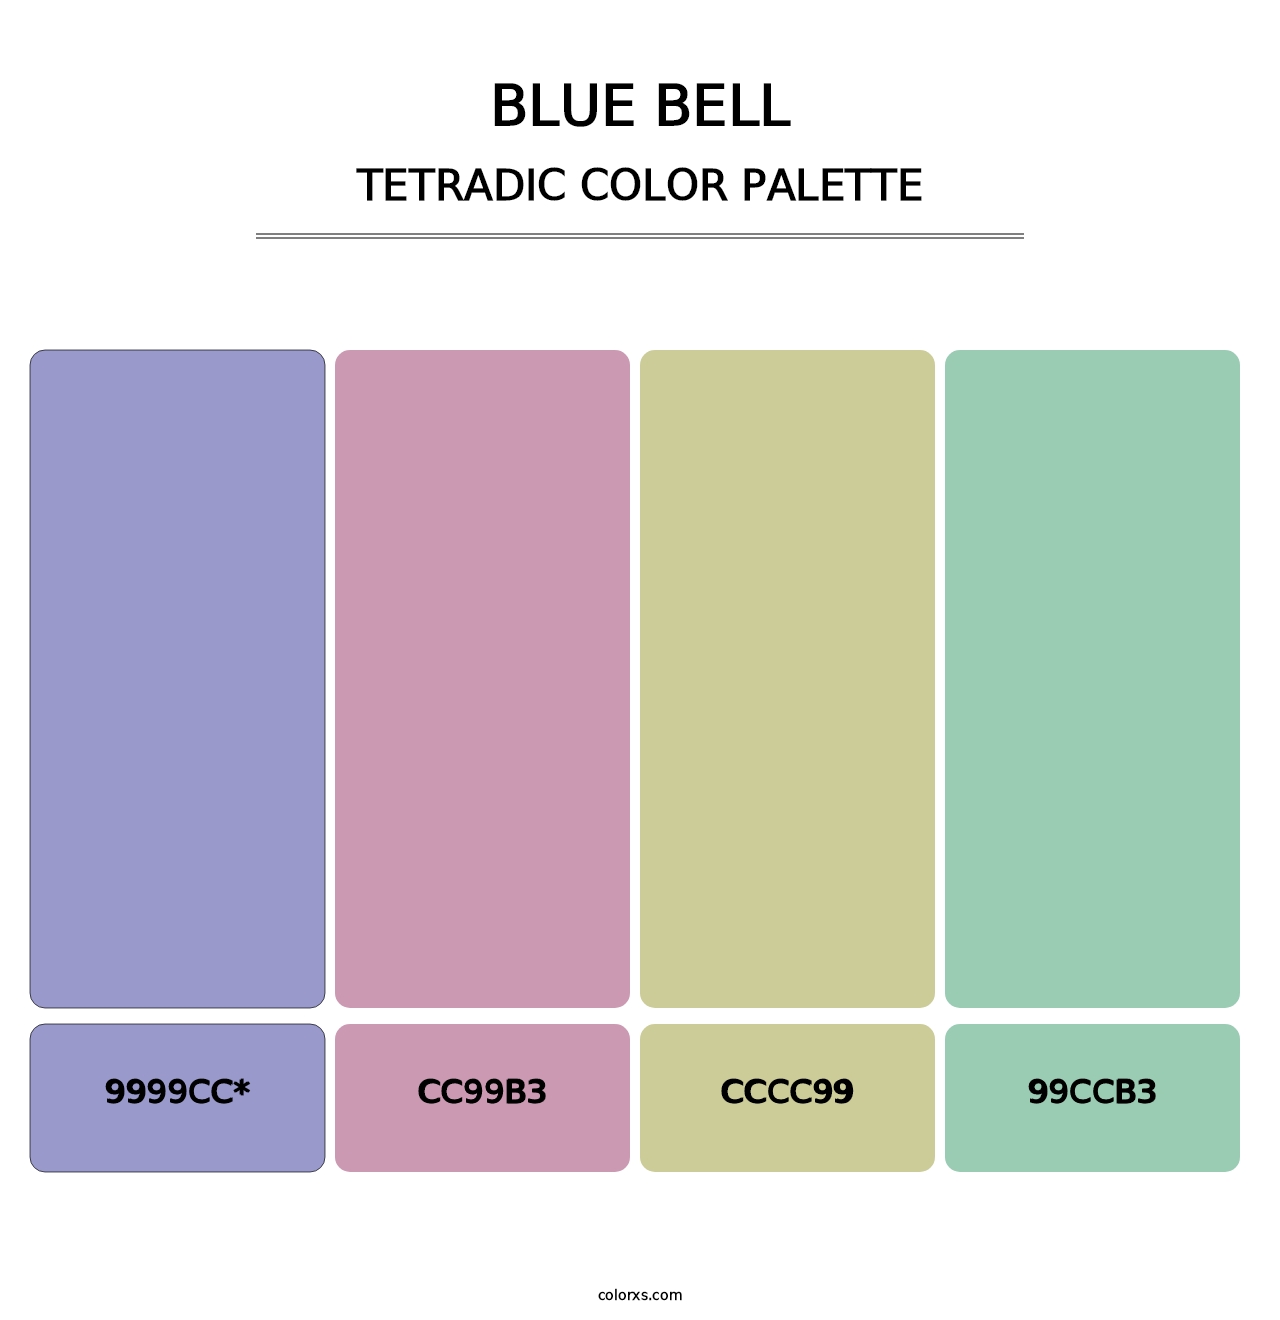 Blue Bell - Tetradic Color Palette